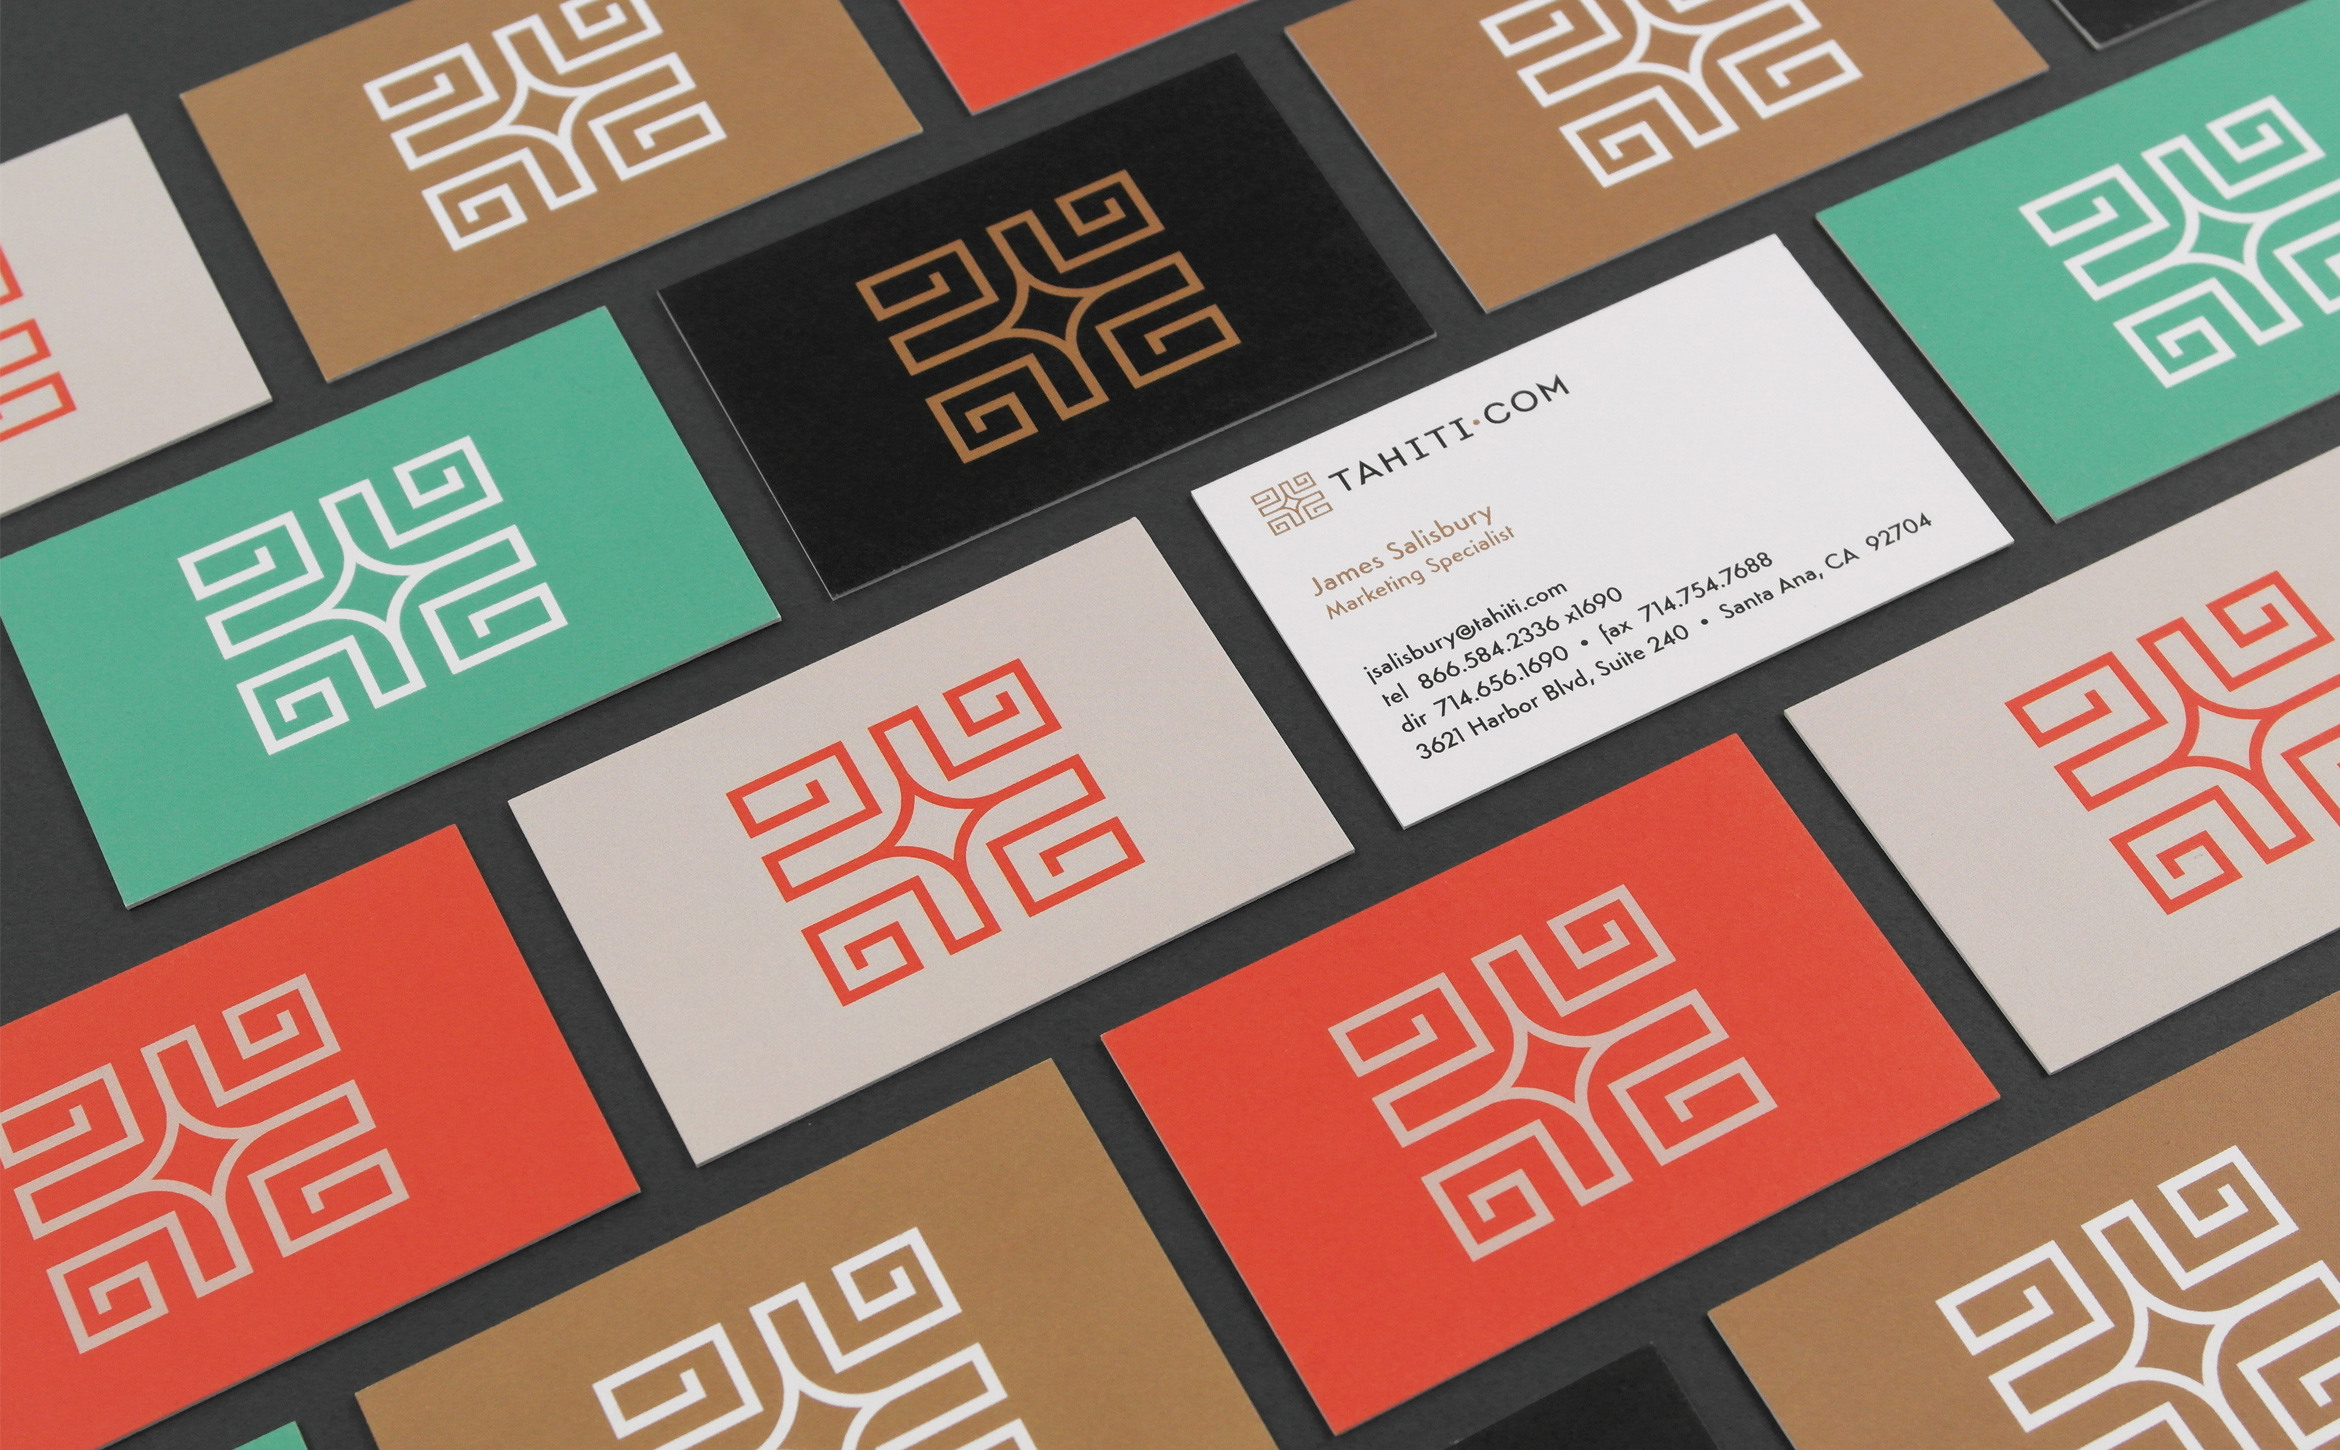 set of multi-colored business card designs for tahiti.com